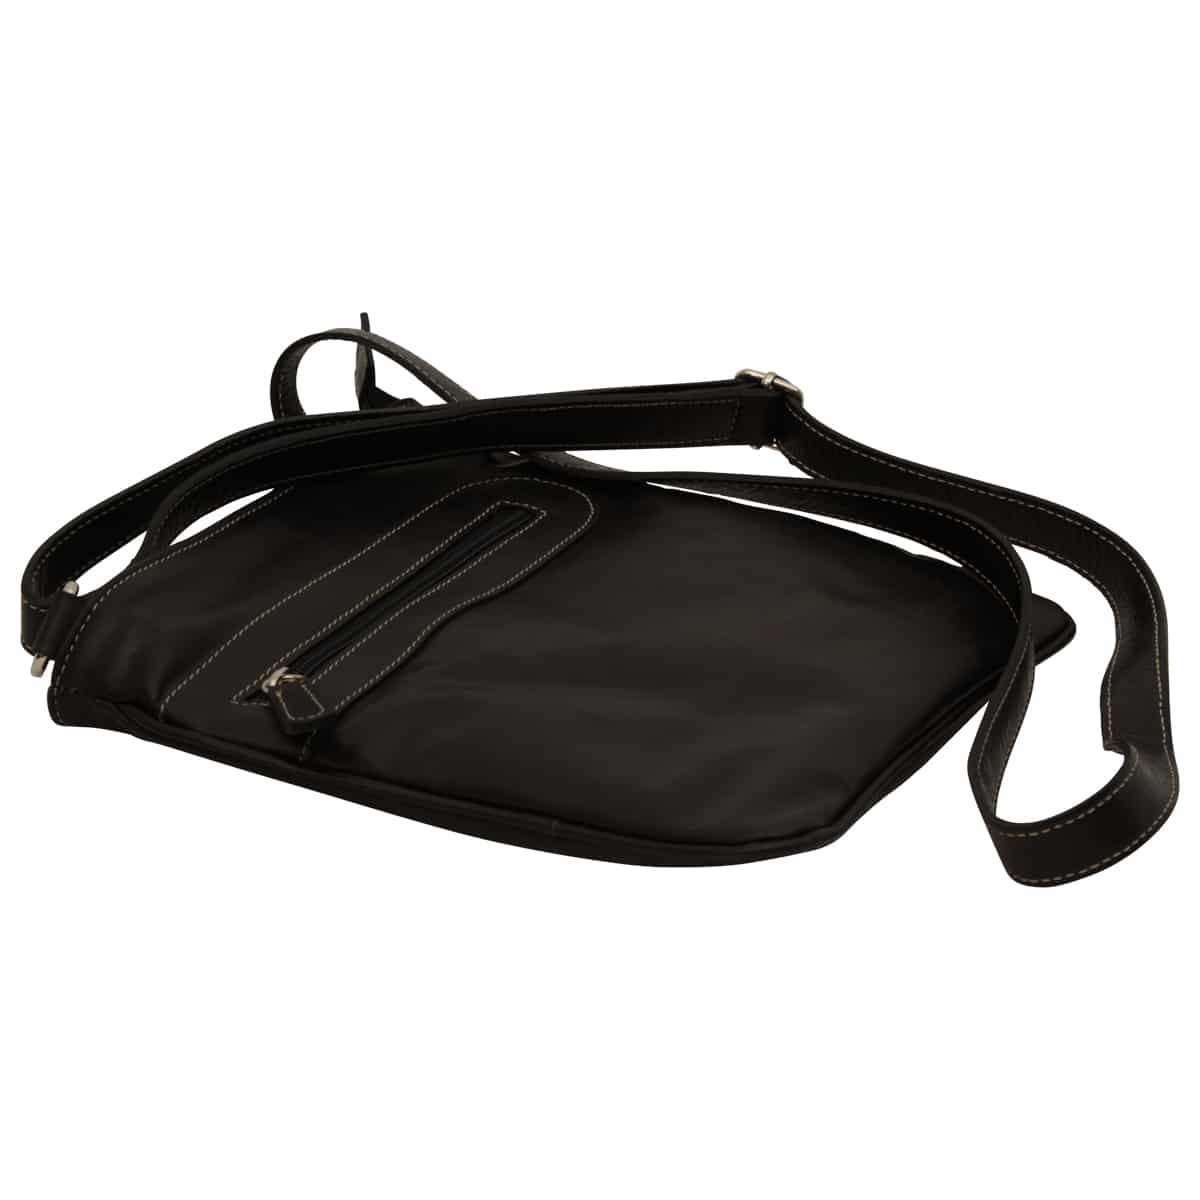 Leather cross body bag with zip pocket - Black | 086161NE UK | Old Angler Firenze